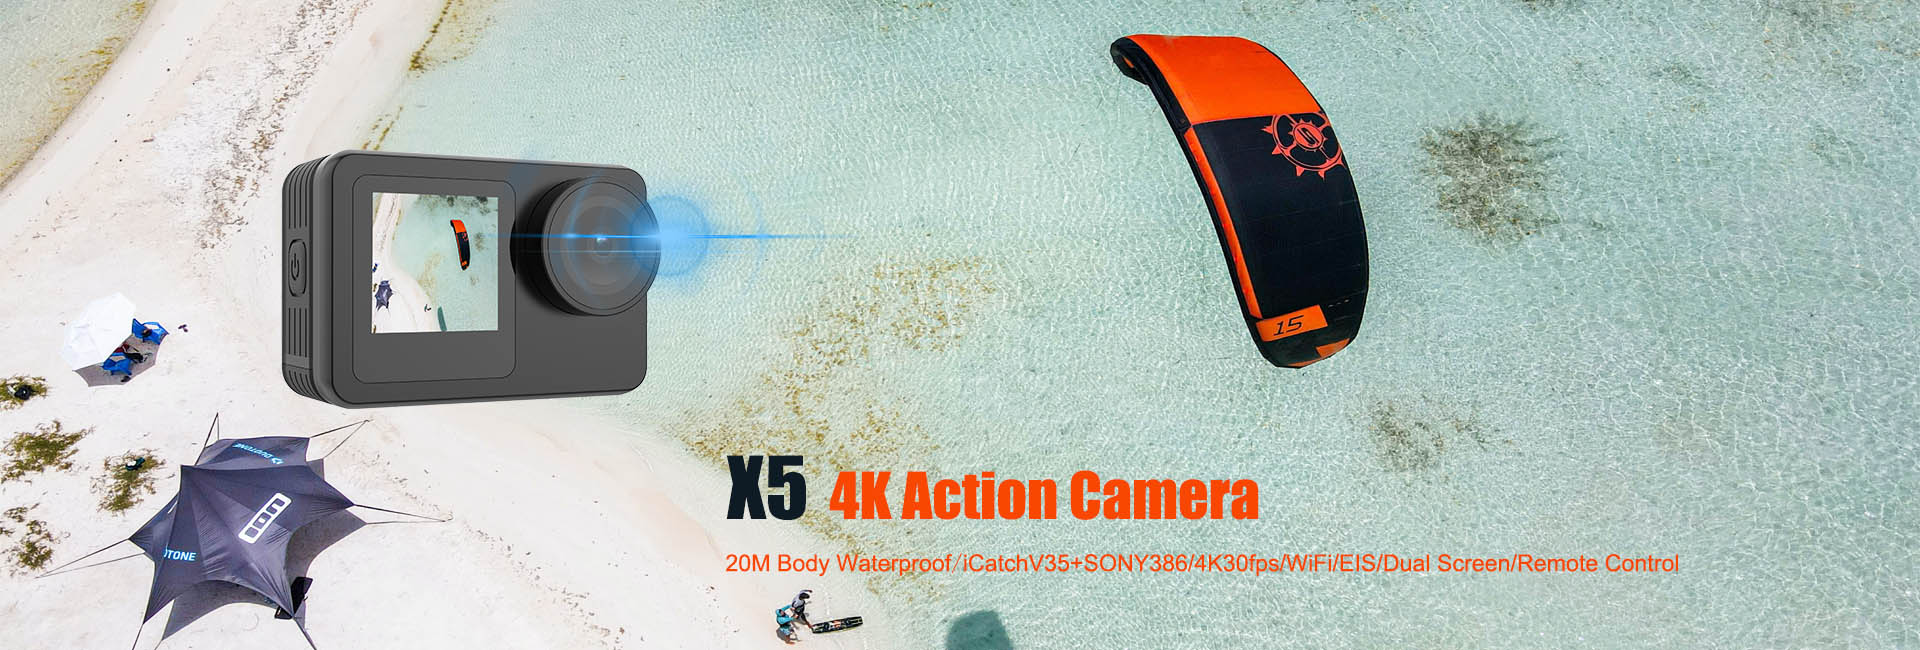 X5 20M Waterproof Action Camera 4K Video WiFi EIS Dual Screen Remote Control 